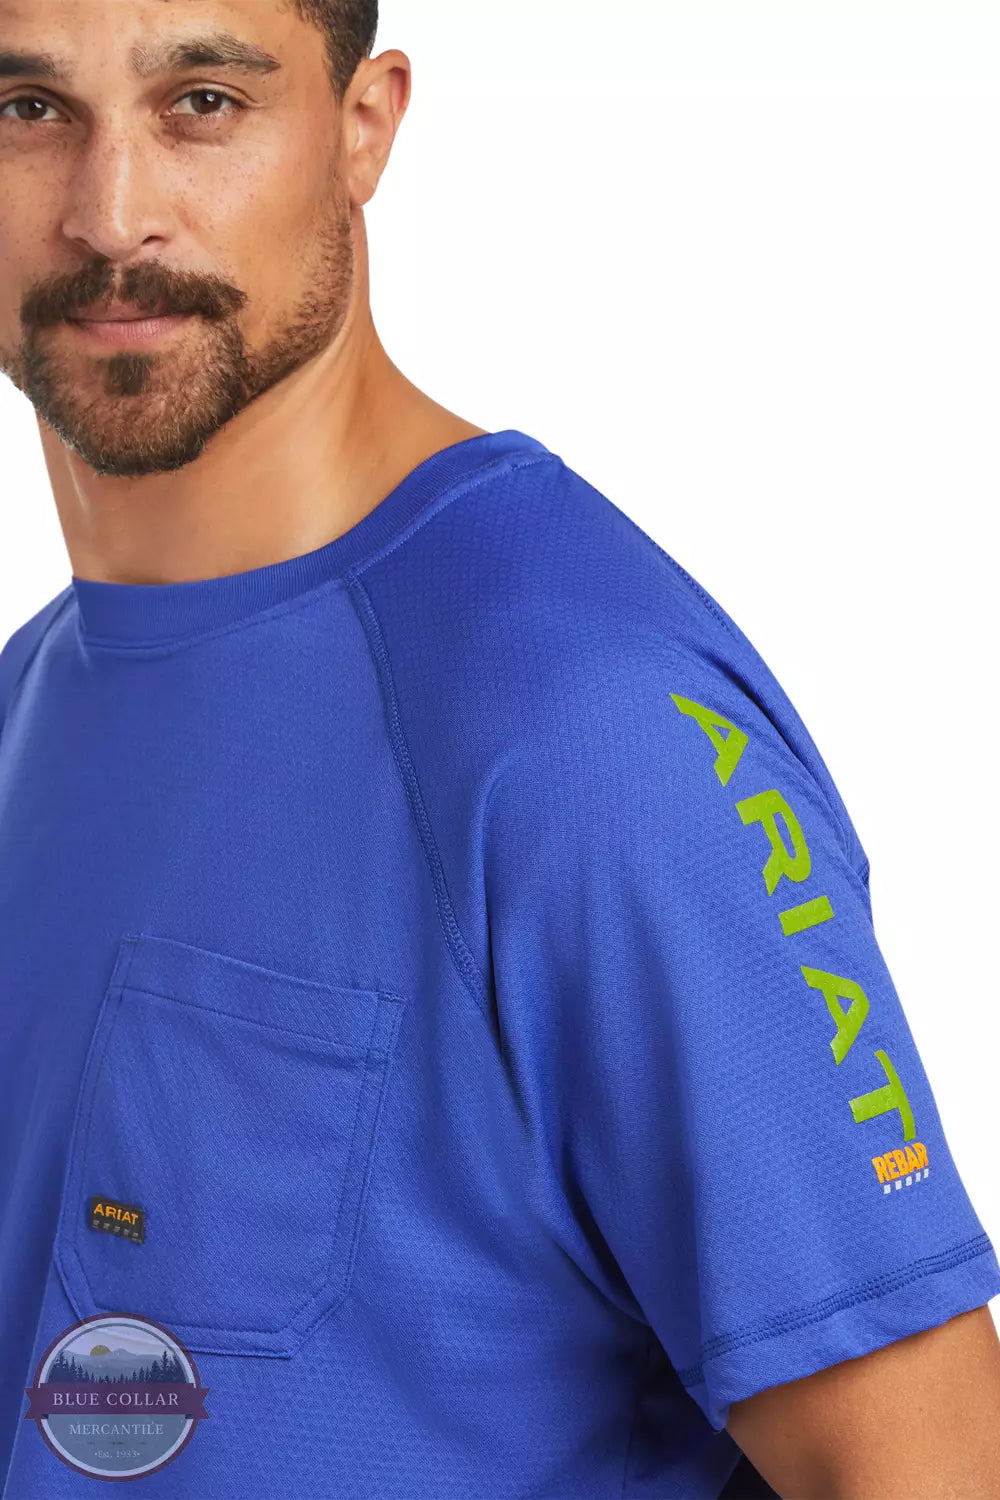 Ariat 10039462 Rebar Heat Fighter Short Sleeve T-Shirt in Royal Blue Detail View